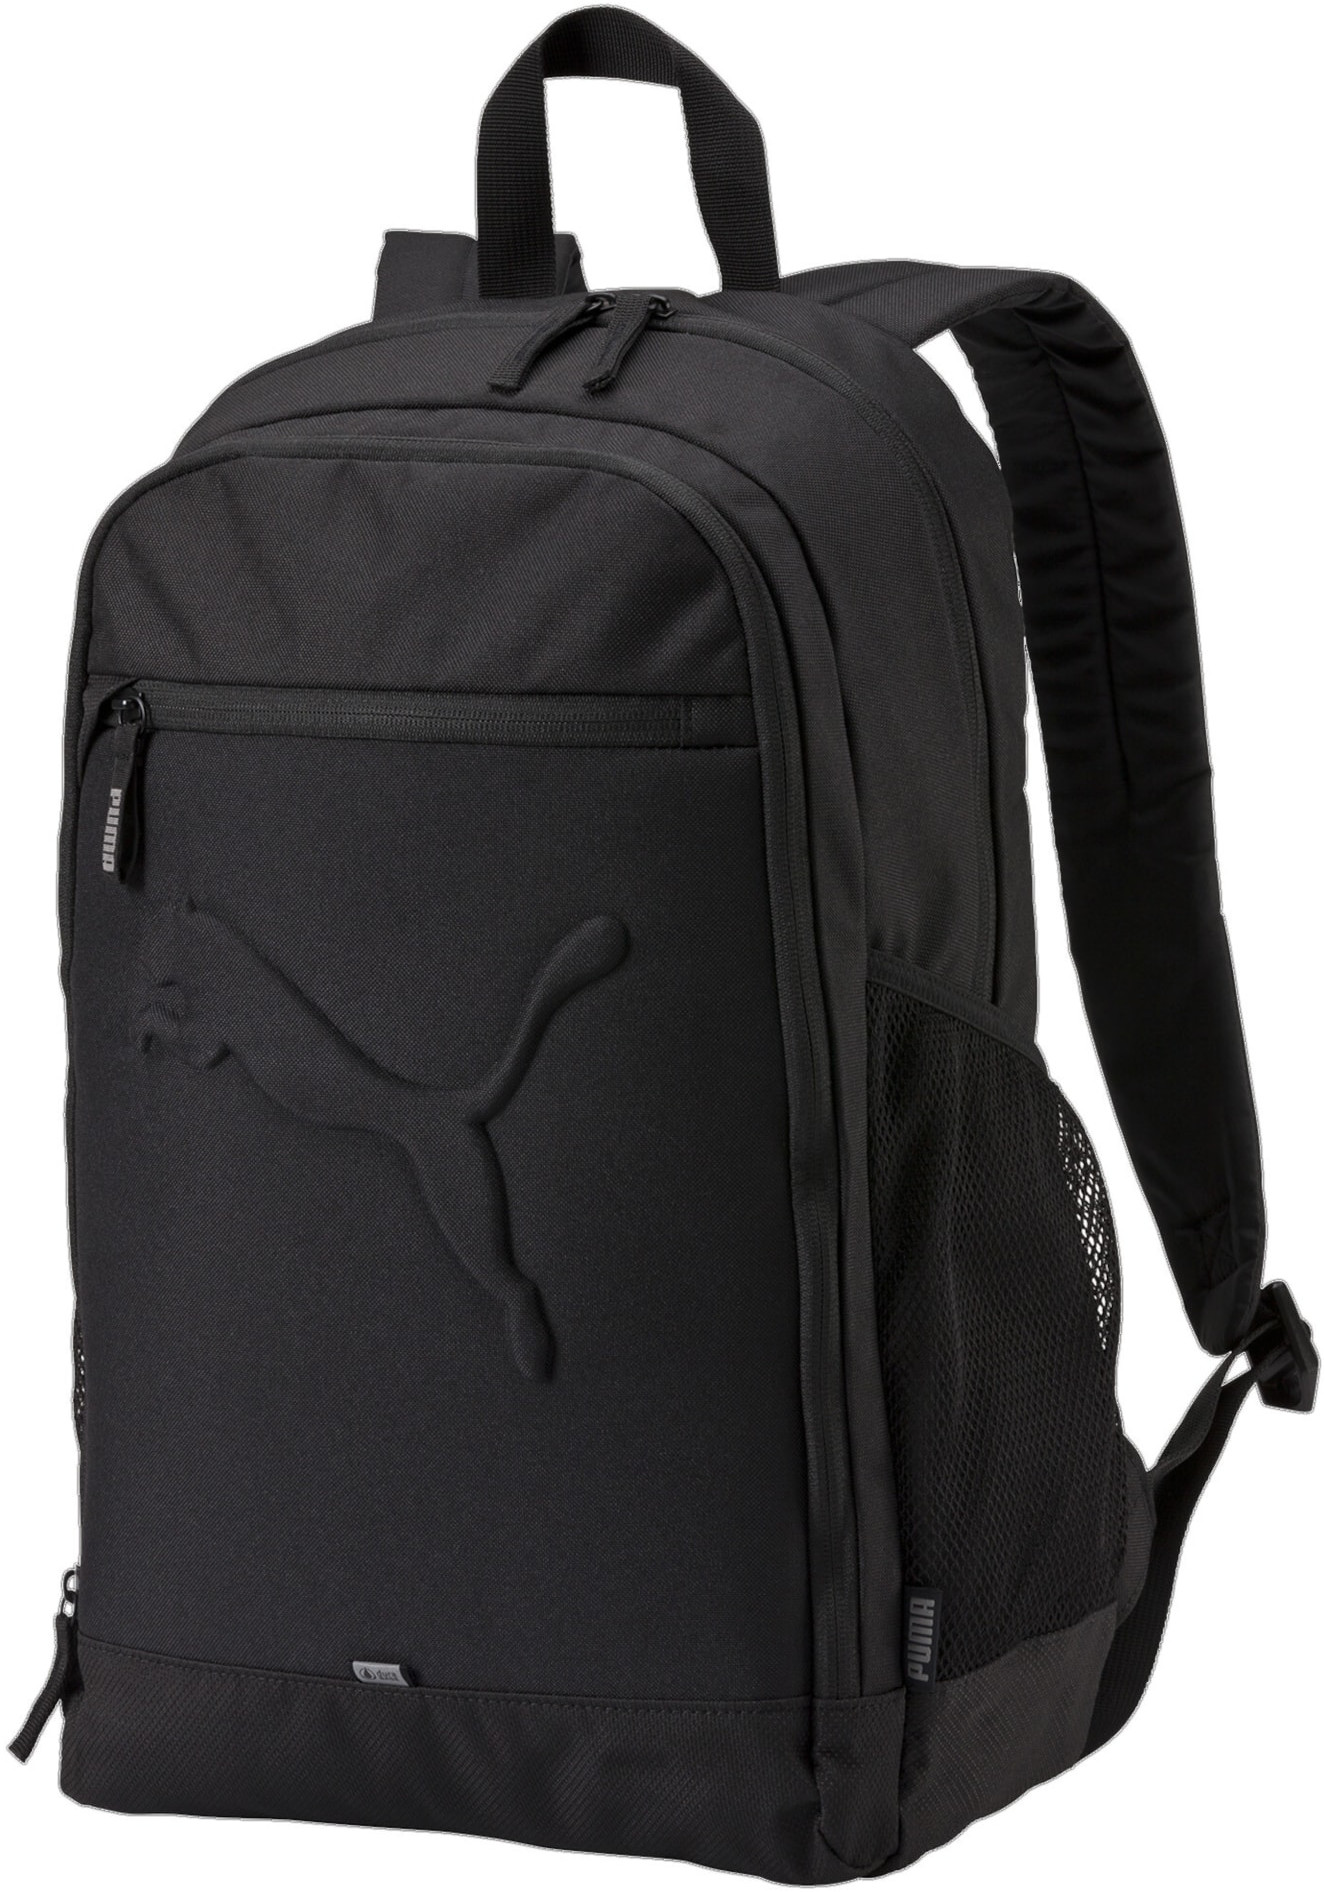 Plecak Puma Buzz Backpack black